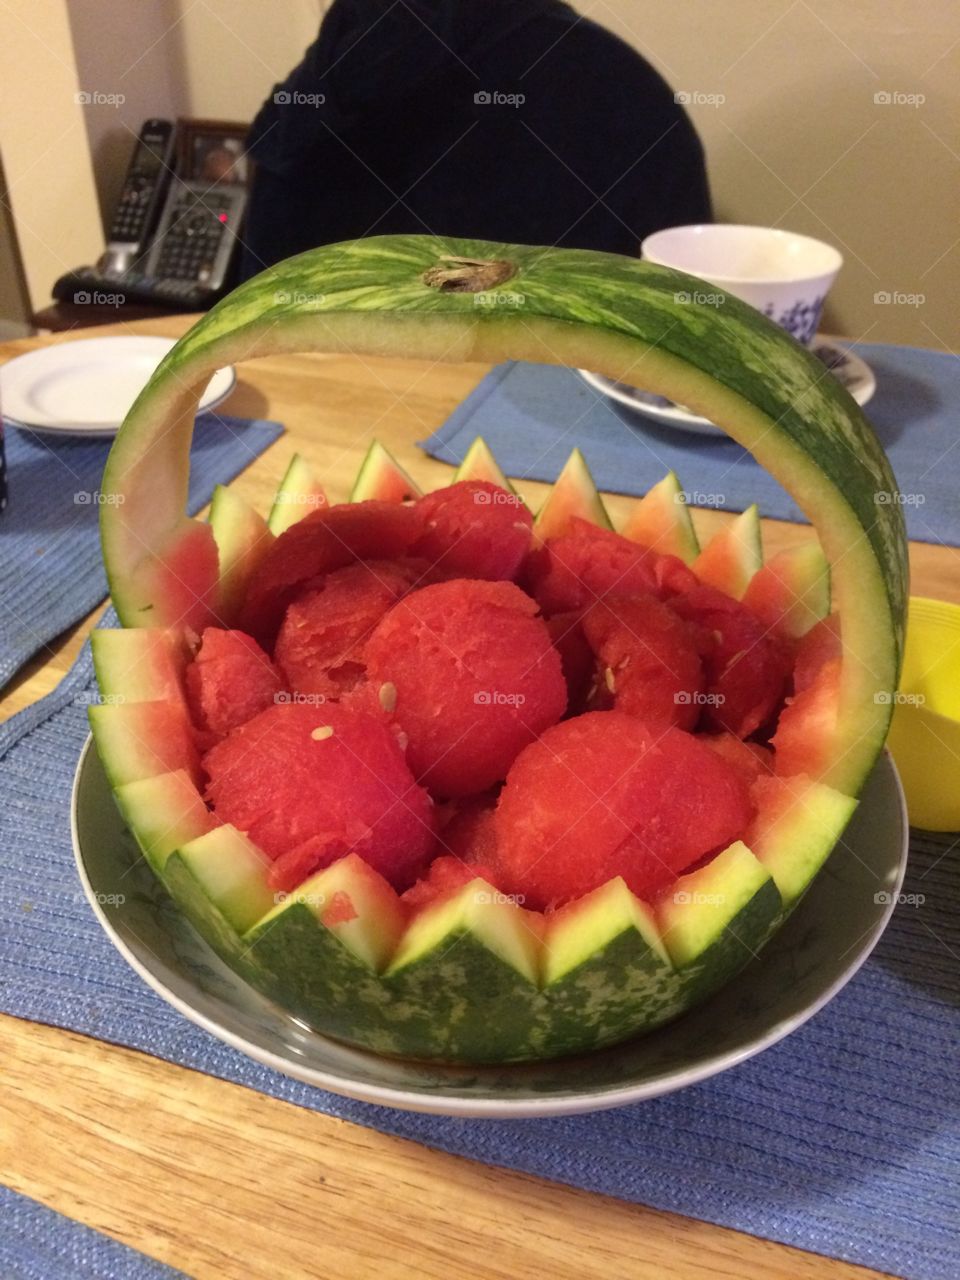 Watermelon basket